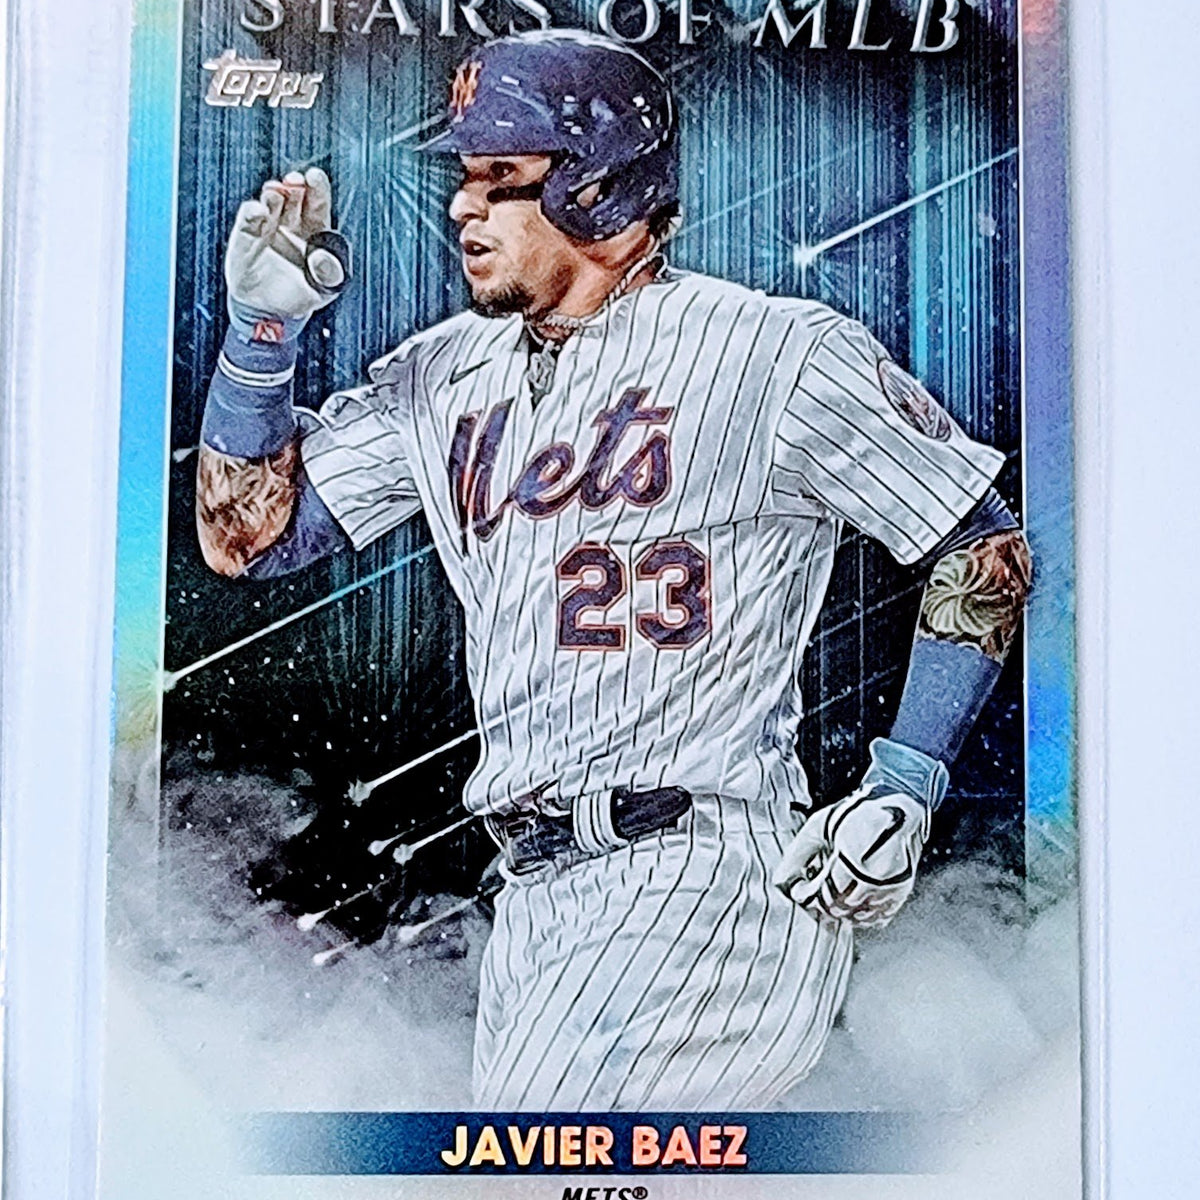  2022 Topps Update Rainbow Foil #US89 Javier Baez Detroit Tigers  Baseball Trading Card : Collectibles & Fine Art